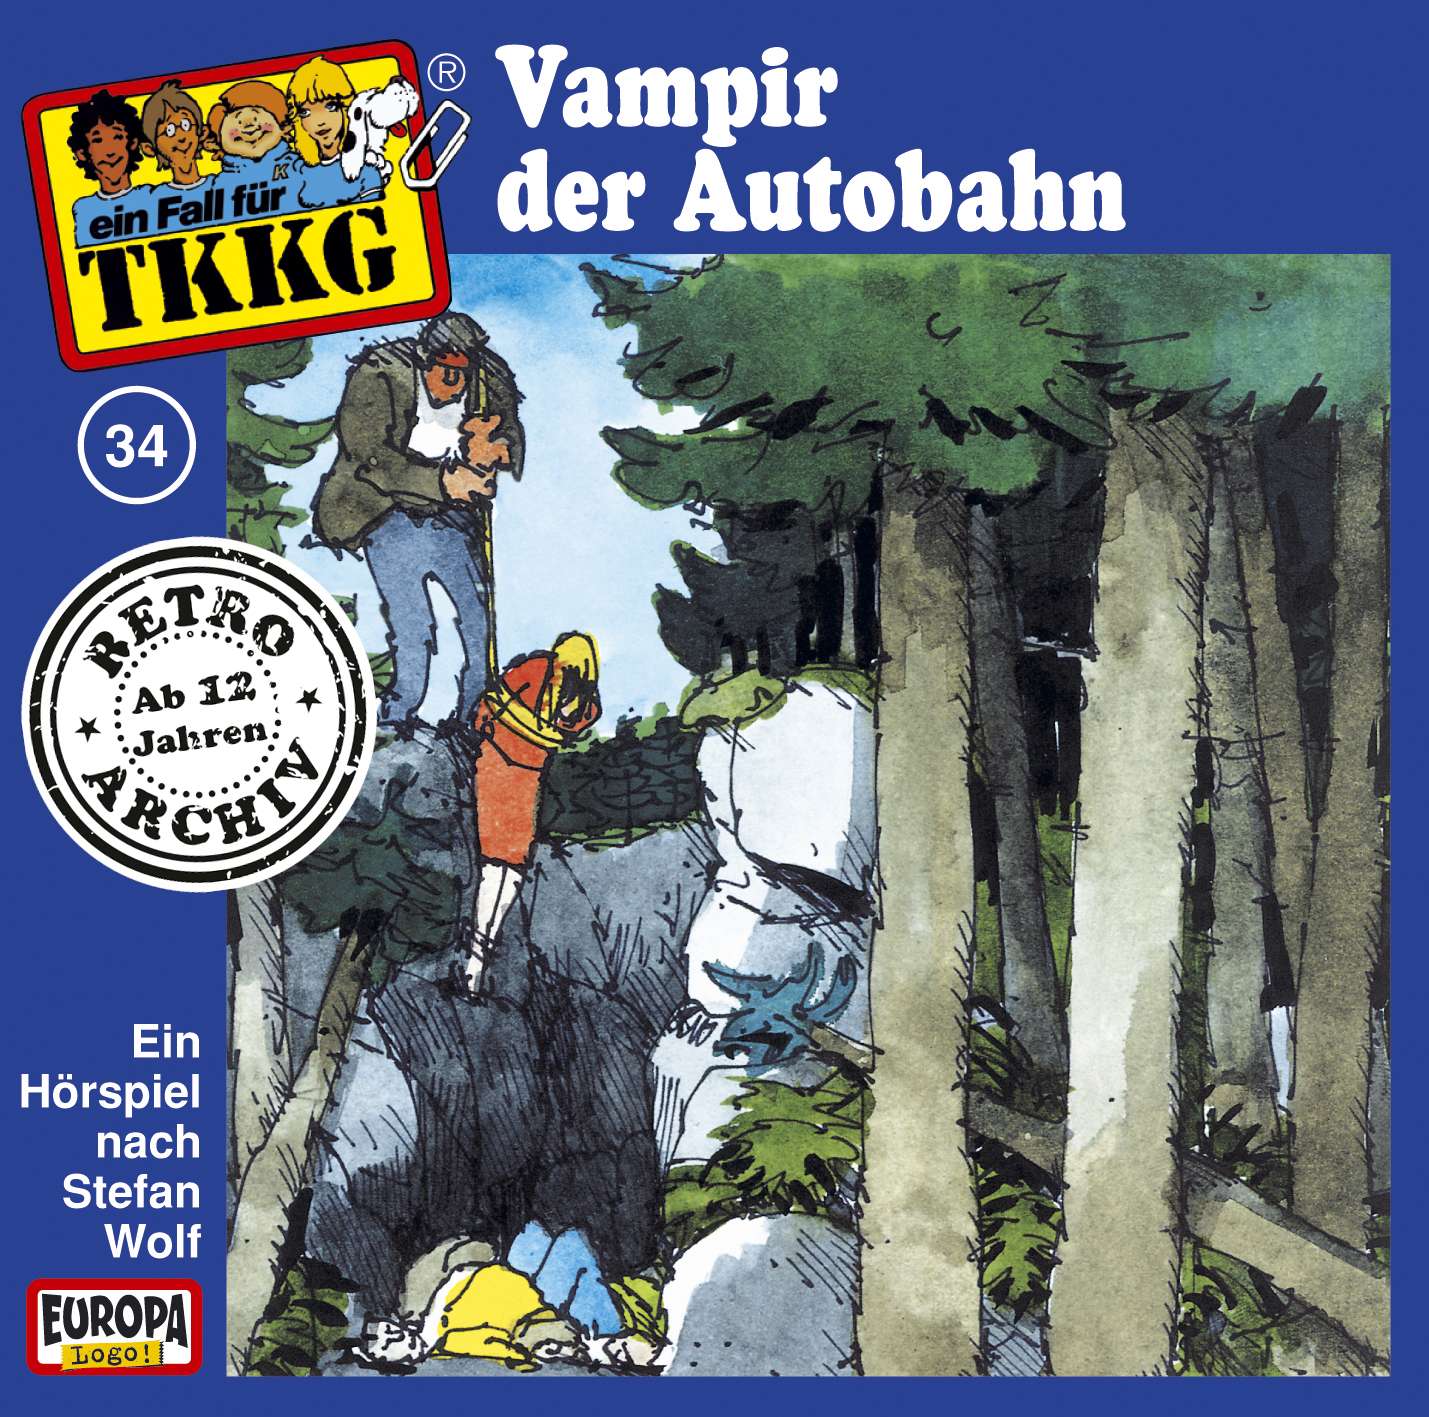 TKKG Retro-Archiv: Vampir der Autobahn